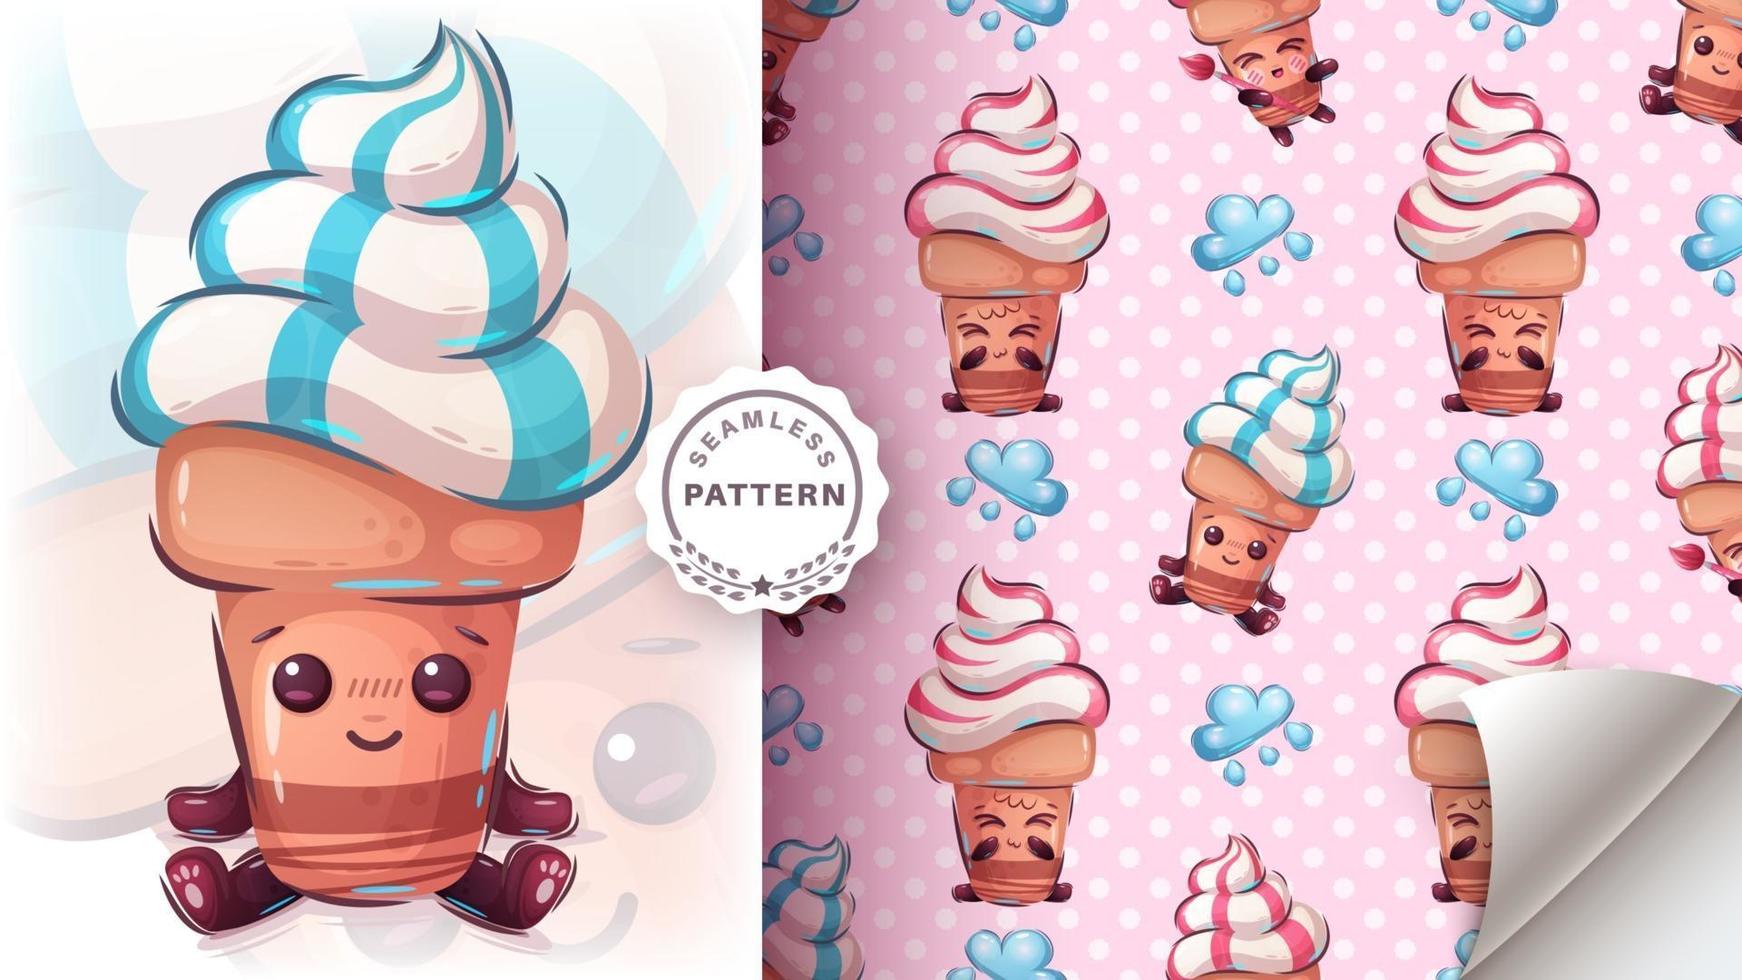 Sweet ice cream carton character vector